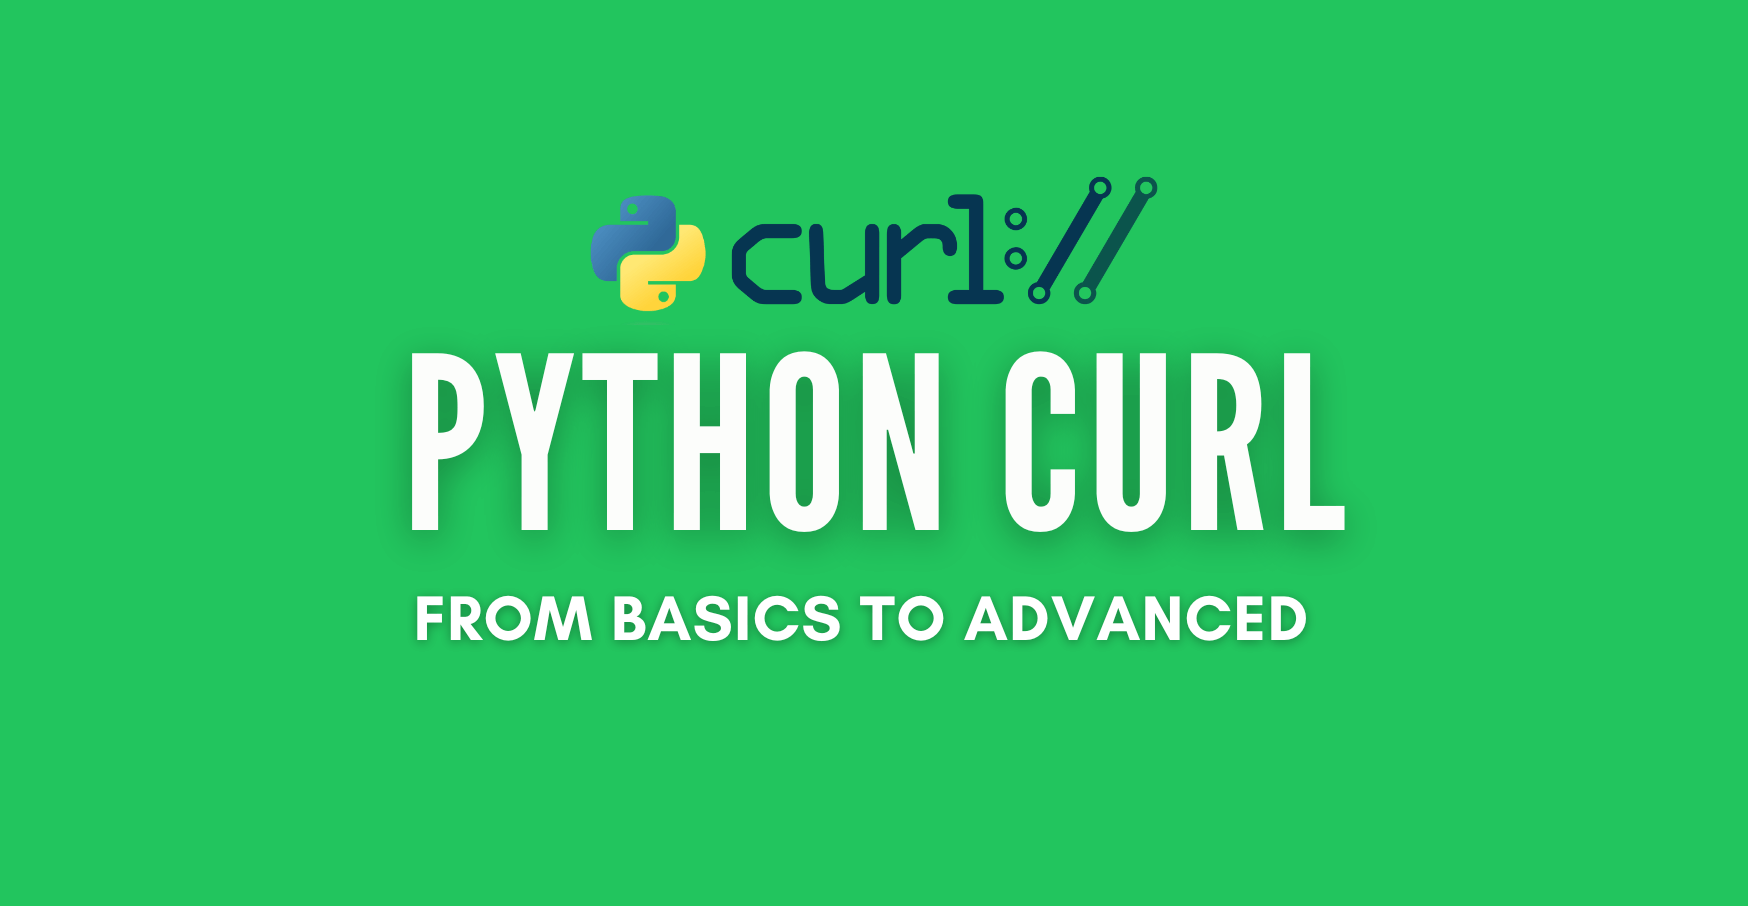 Python cURL